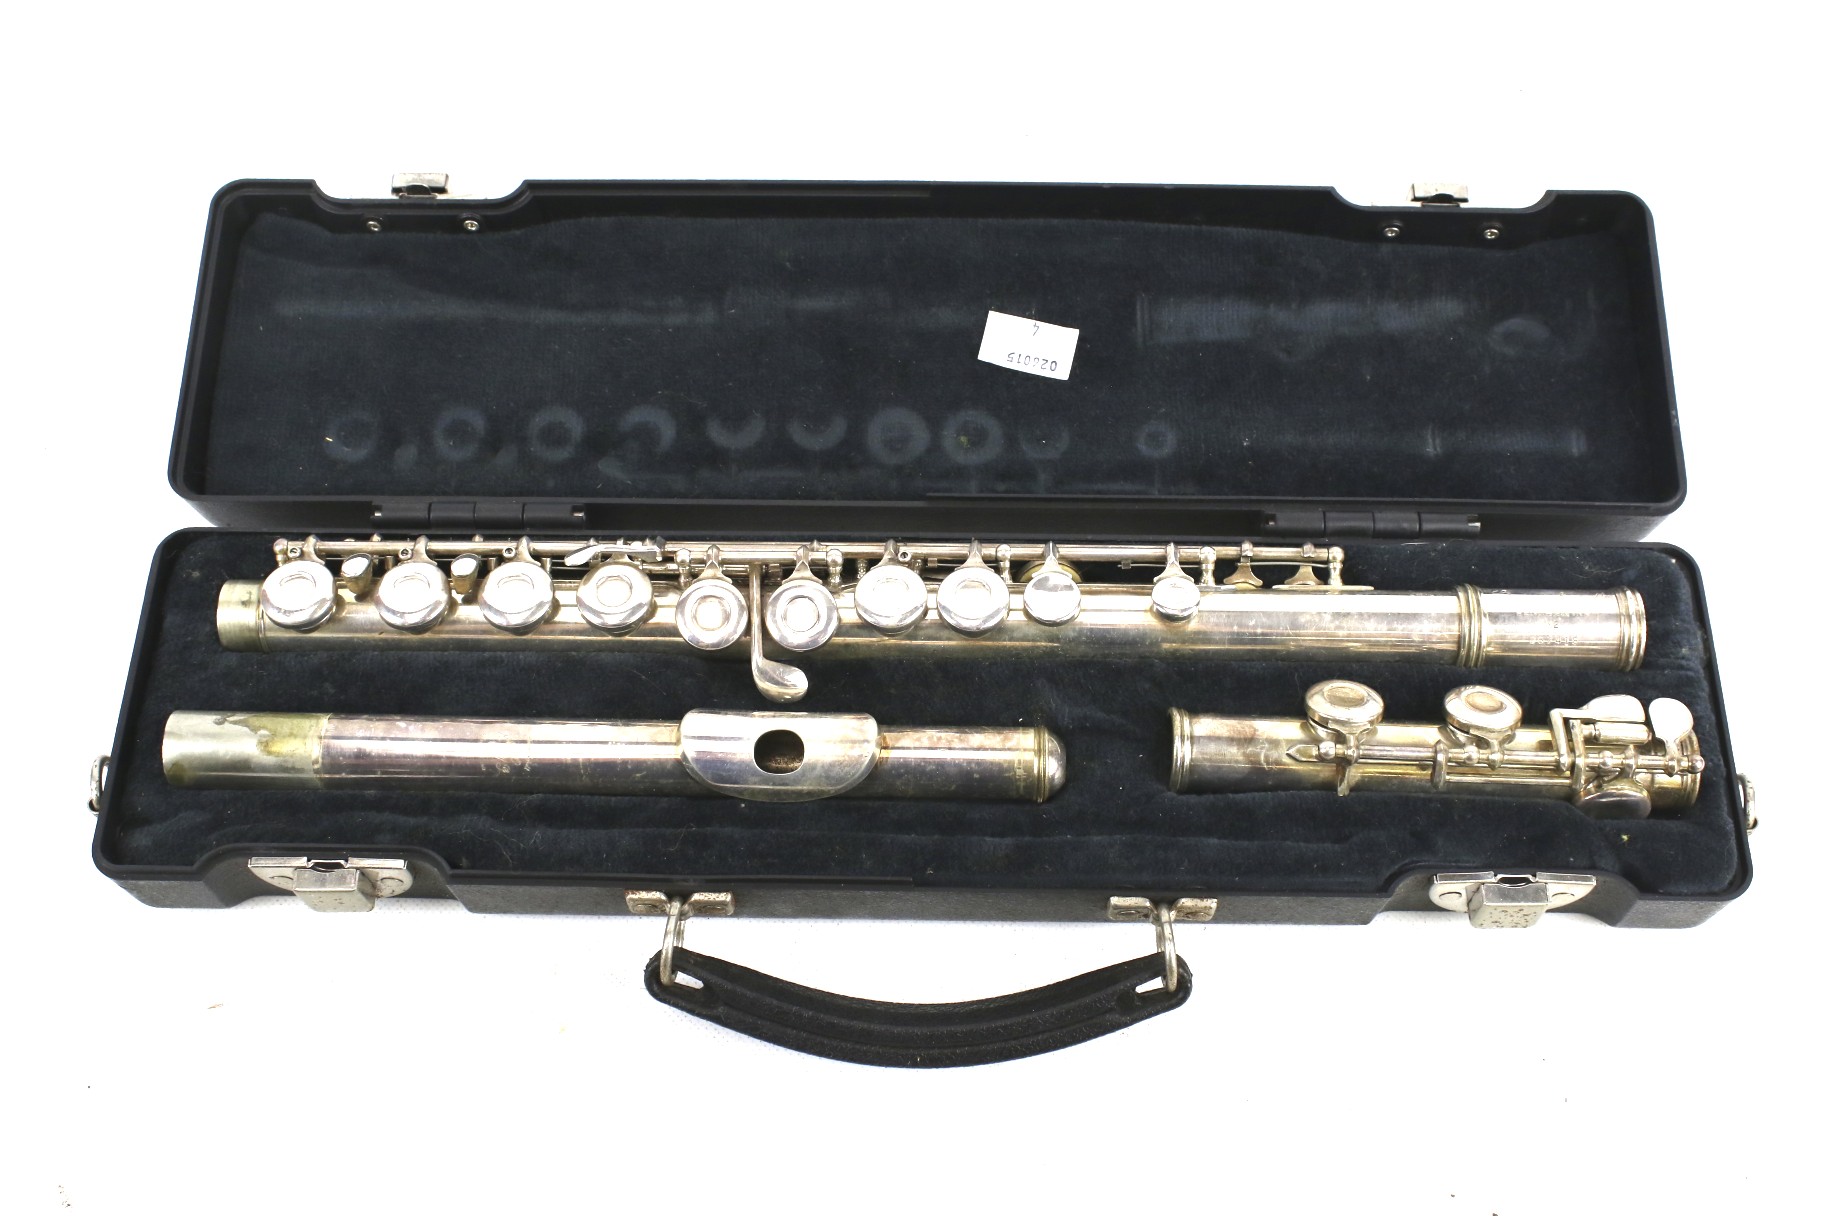 A Gemeinhardt Elkhart M2 flute and case.